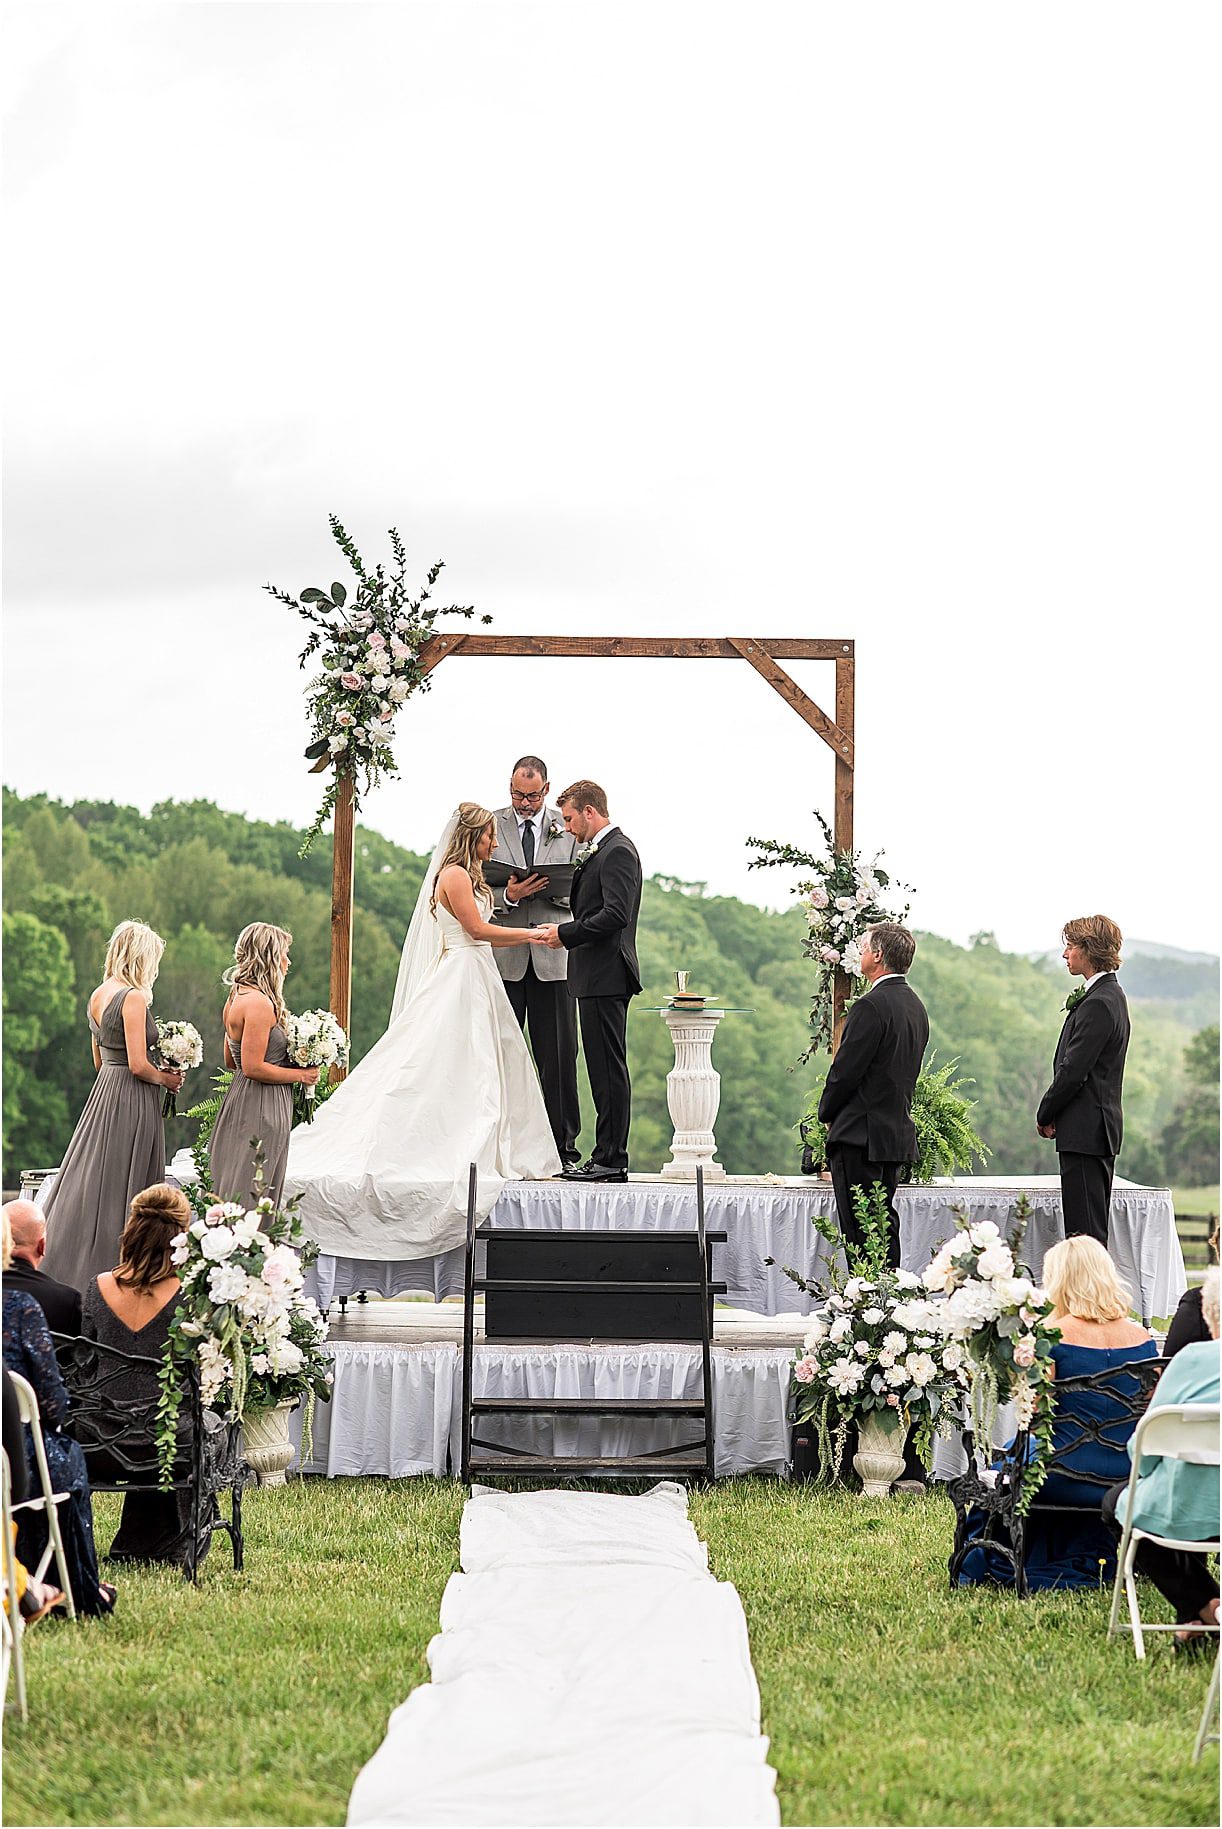 Drive In Wedding Ideas | COVID Wedding Ceremony Ideas | Hill City Bride Virginia Weddings